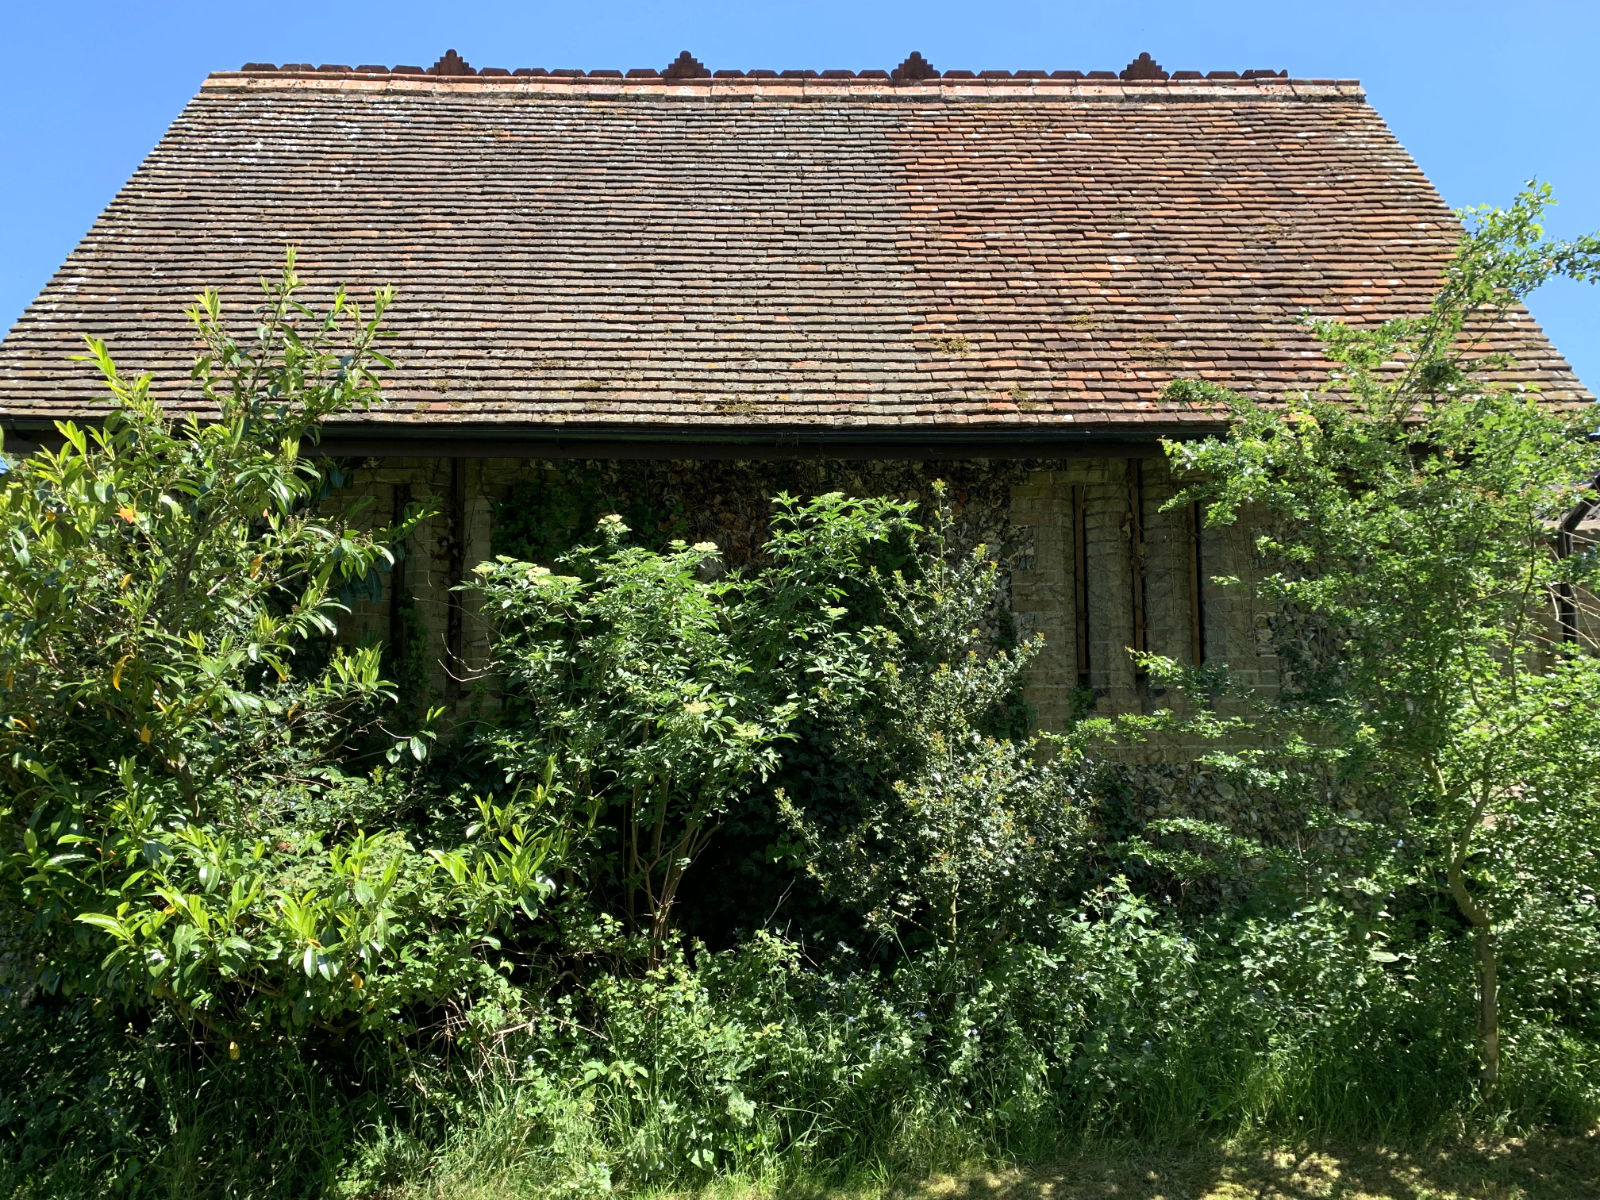 The Henham Estate Coach House roof with surrounding shrubbery